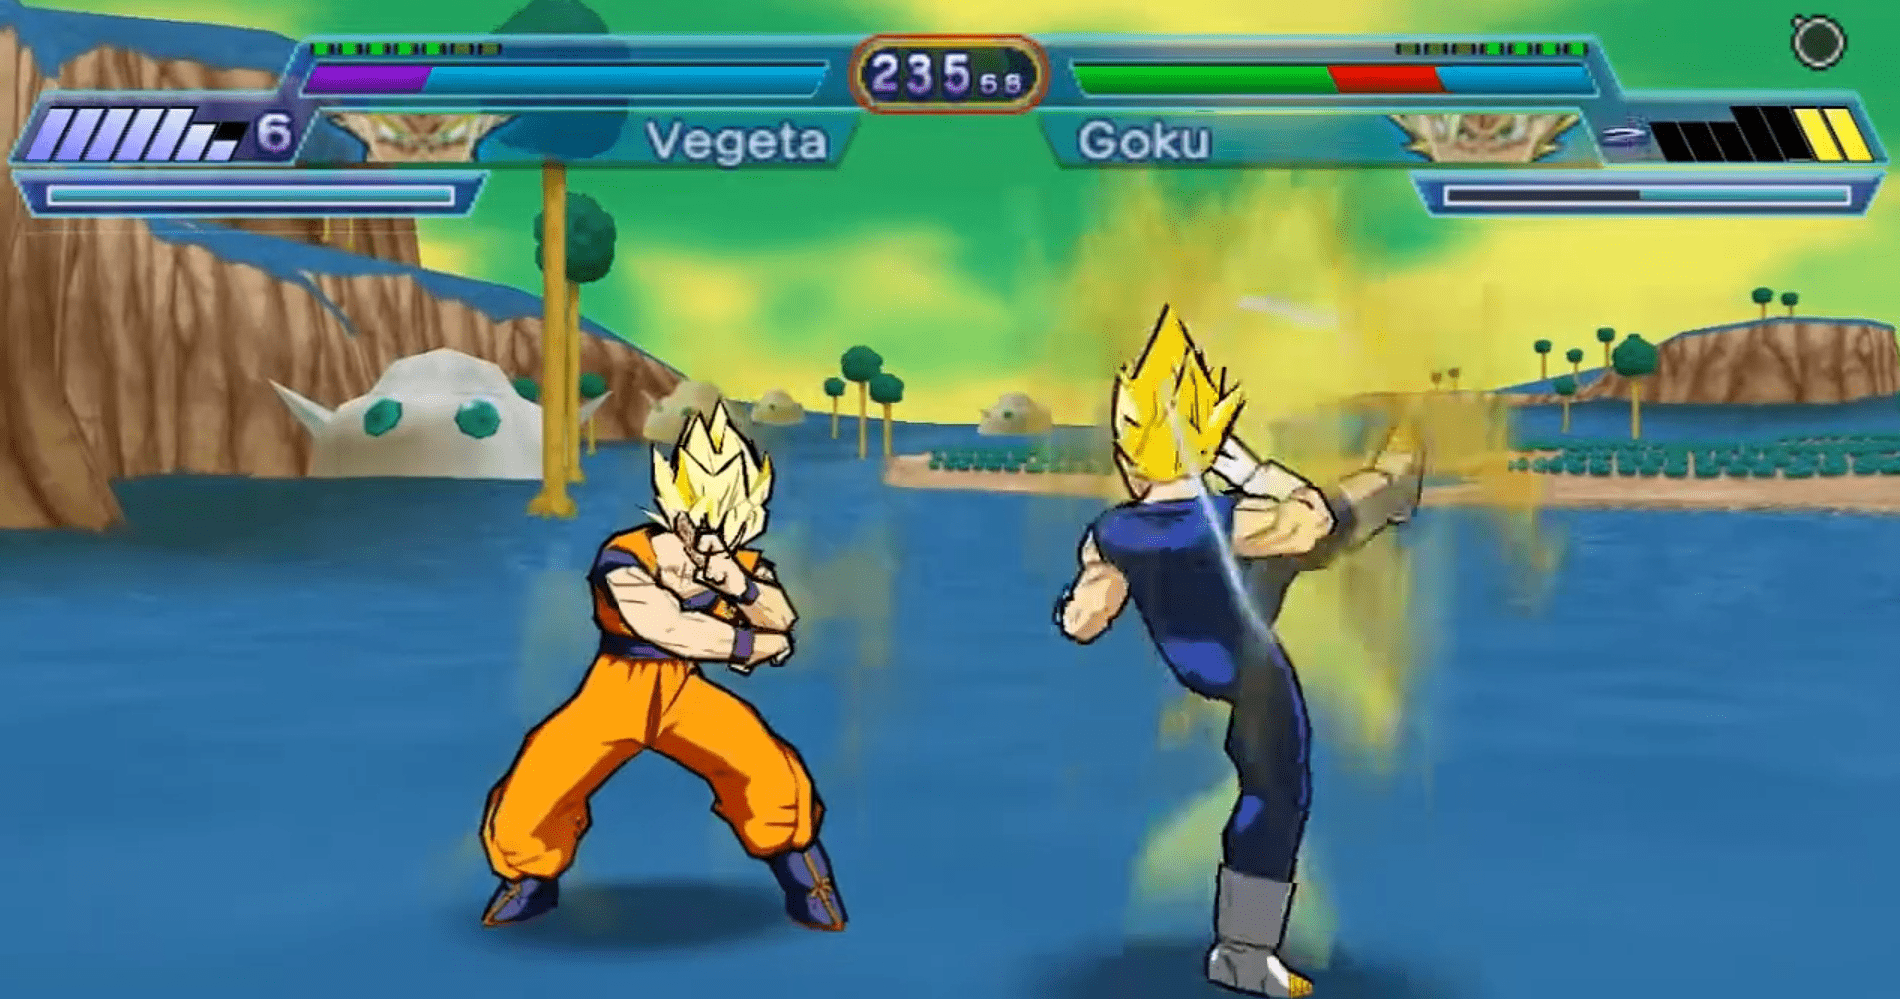 Durante la aventura podremos vivir combates épicos como Goku contra Vegeta